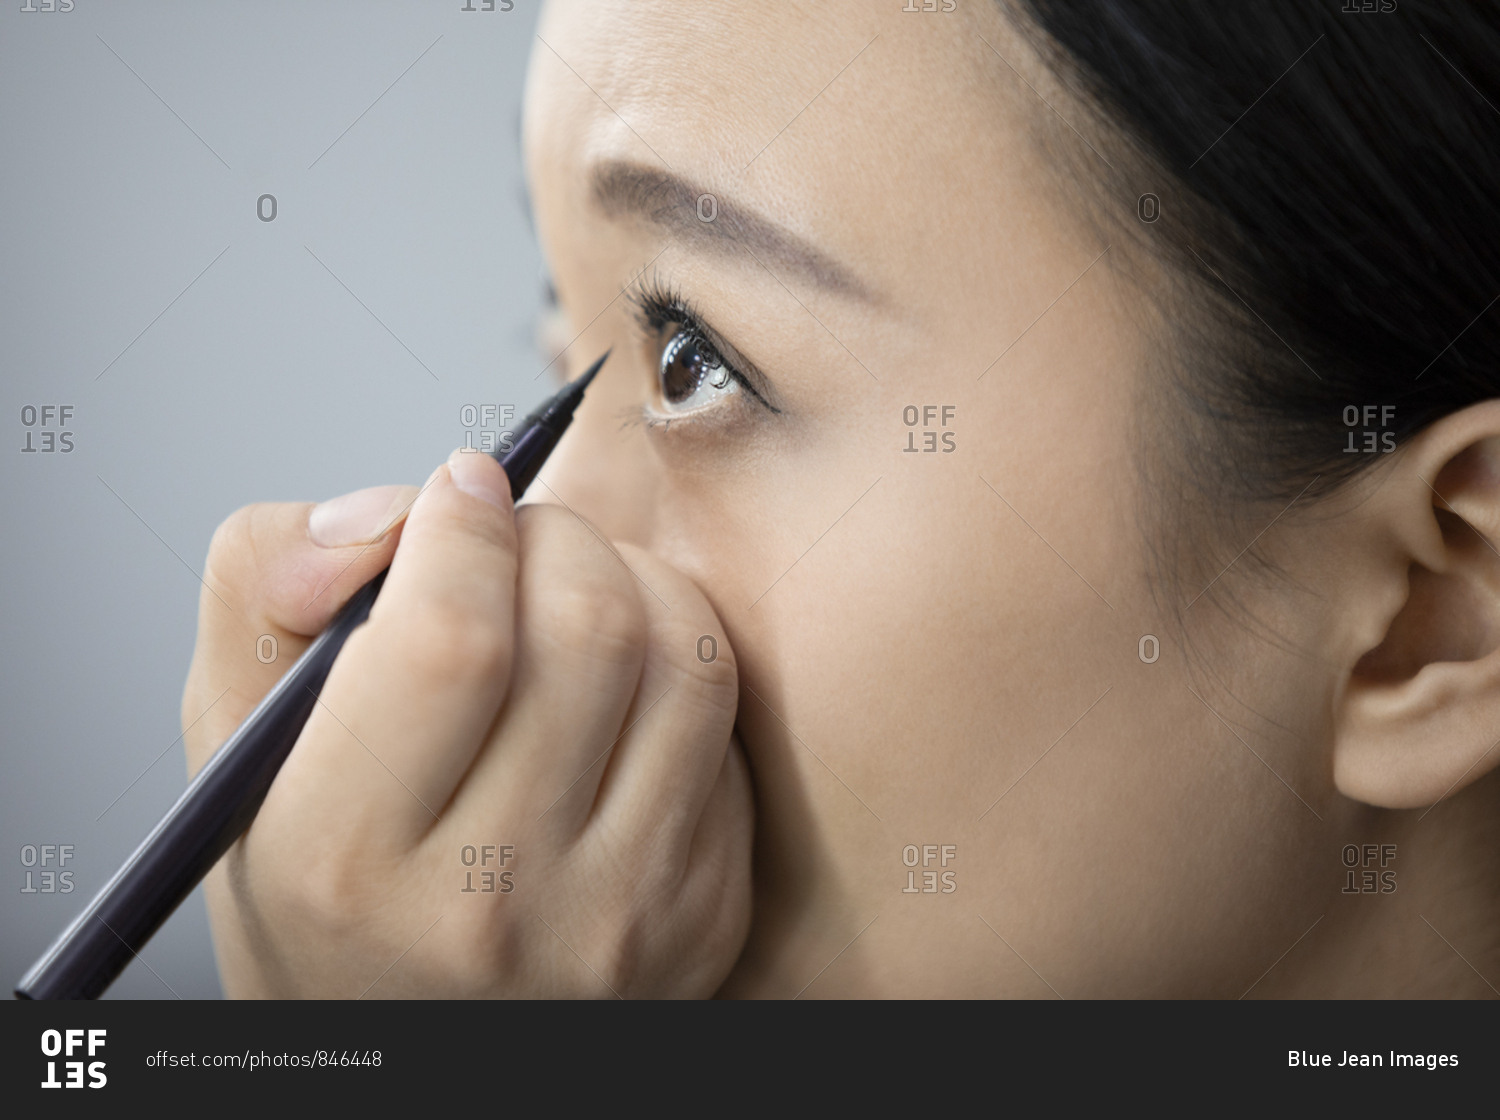 Chinese makeup artist applying makeup on model